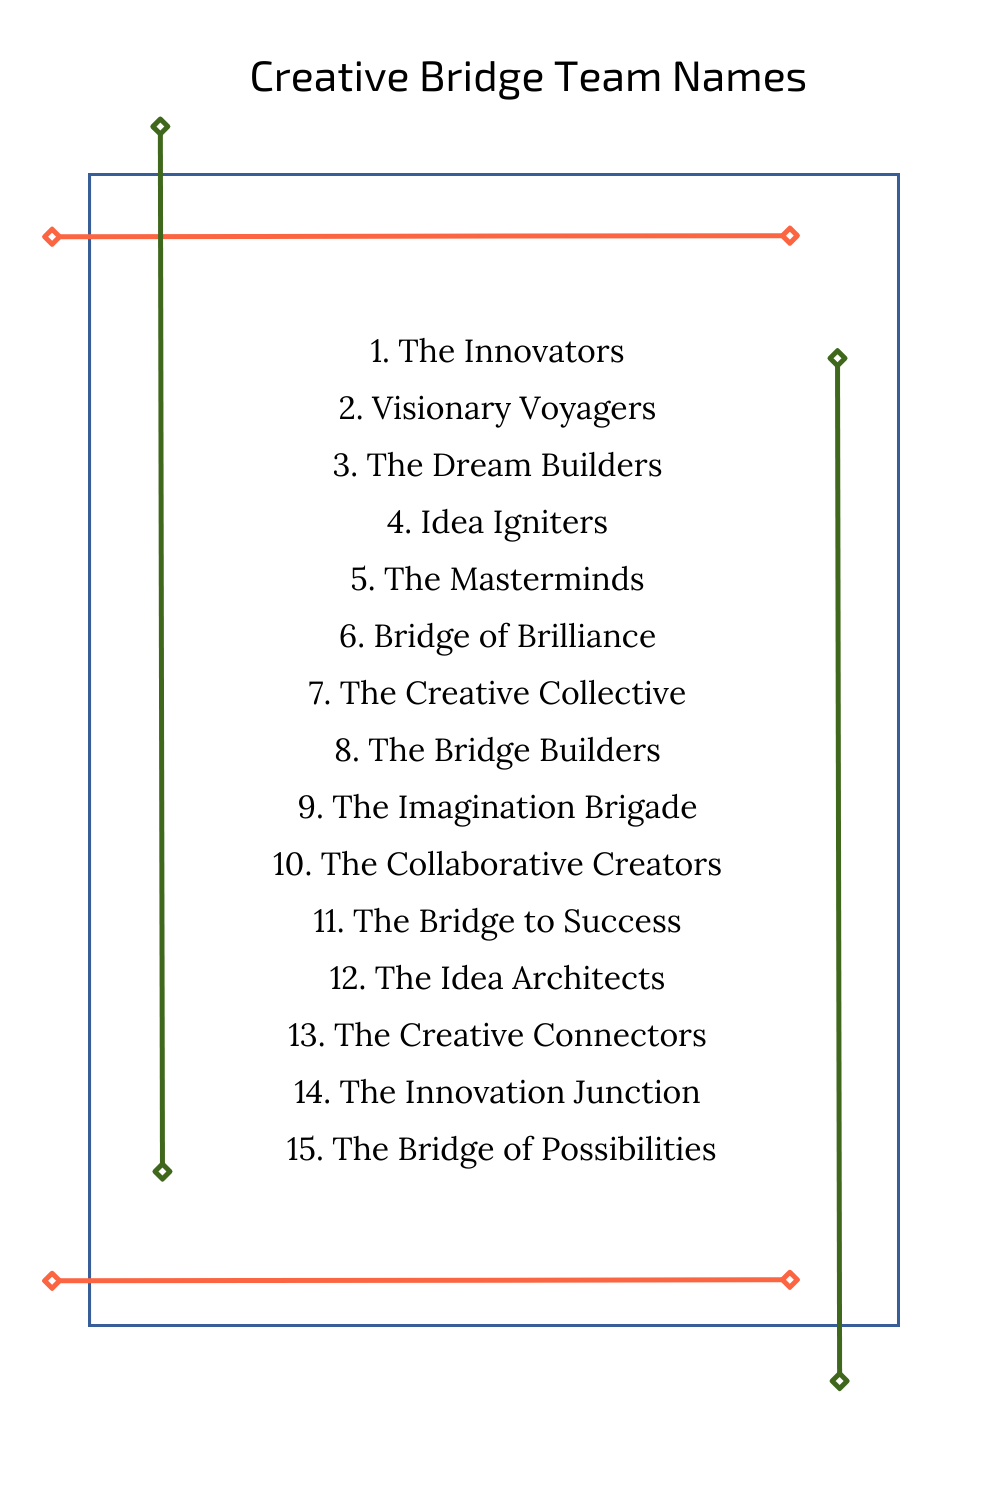 Creative Bridge Team Names